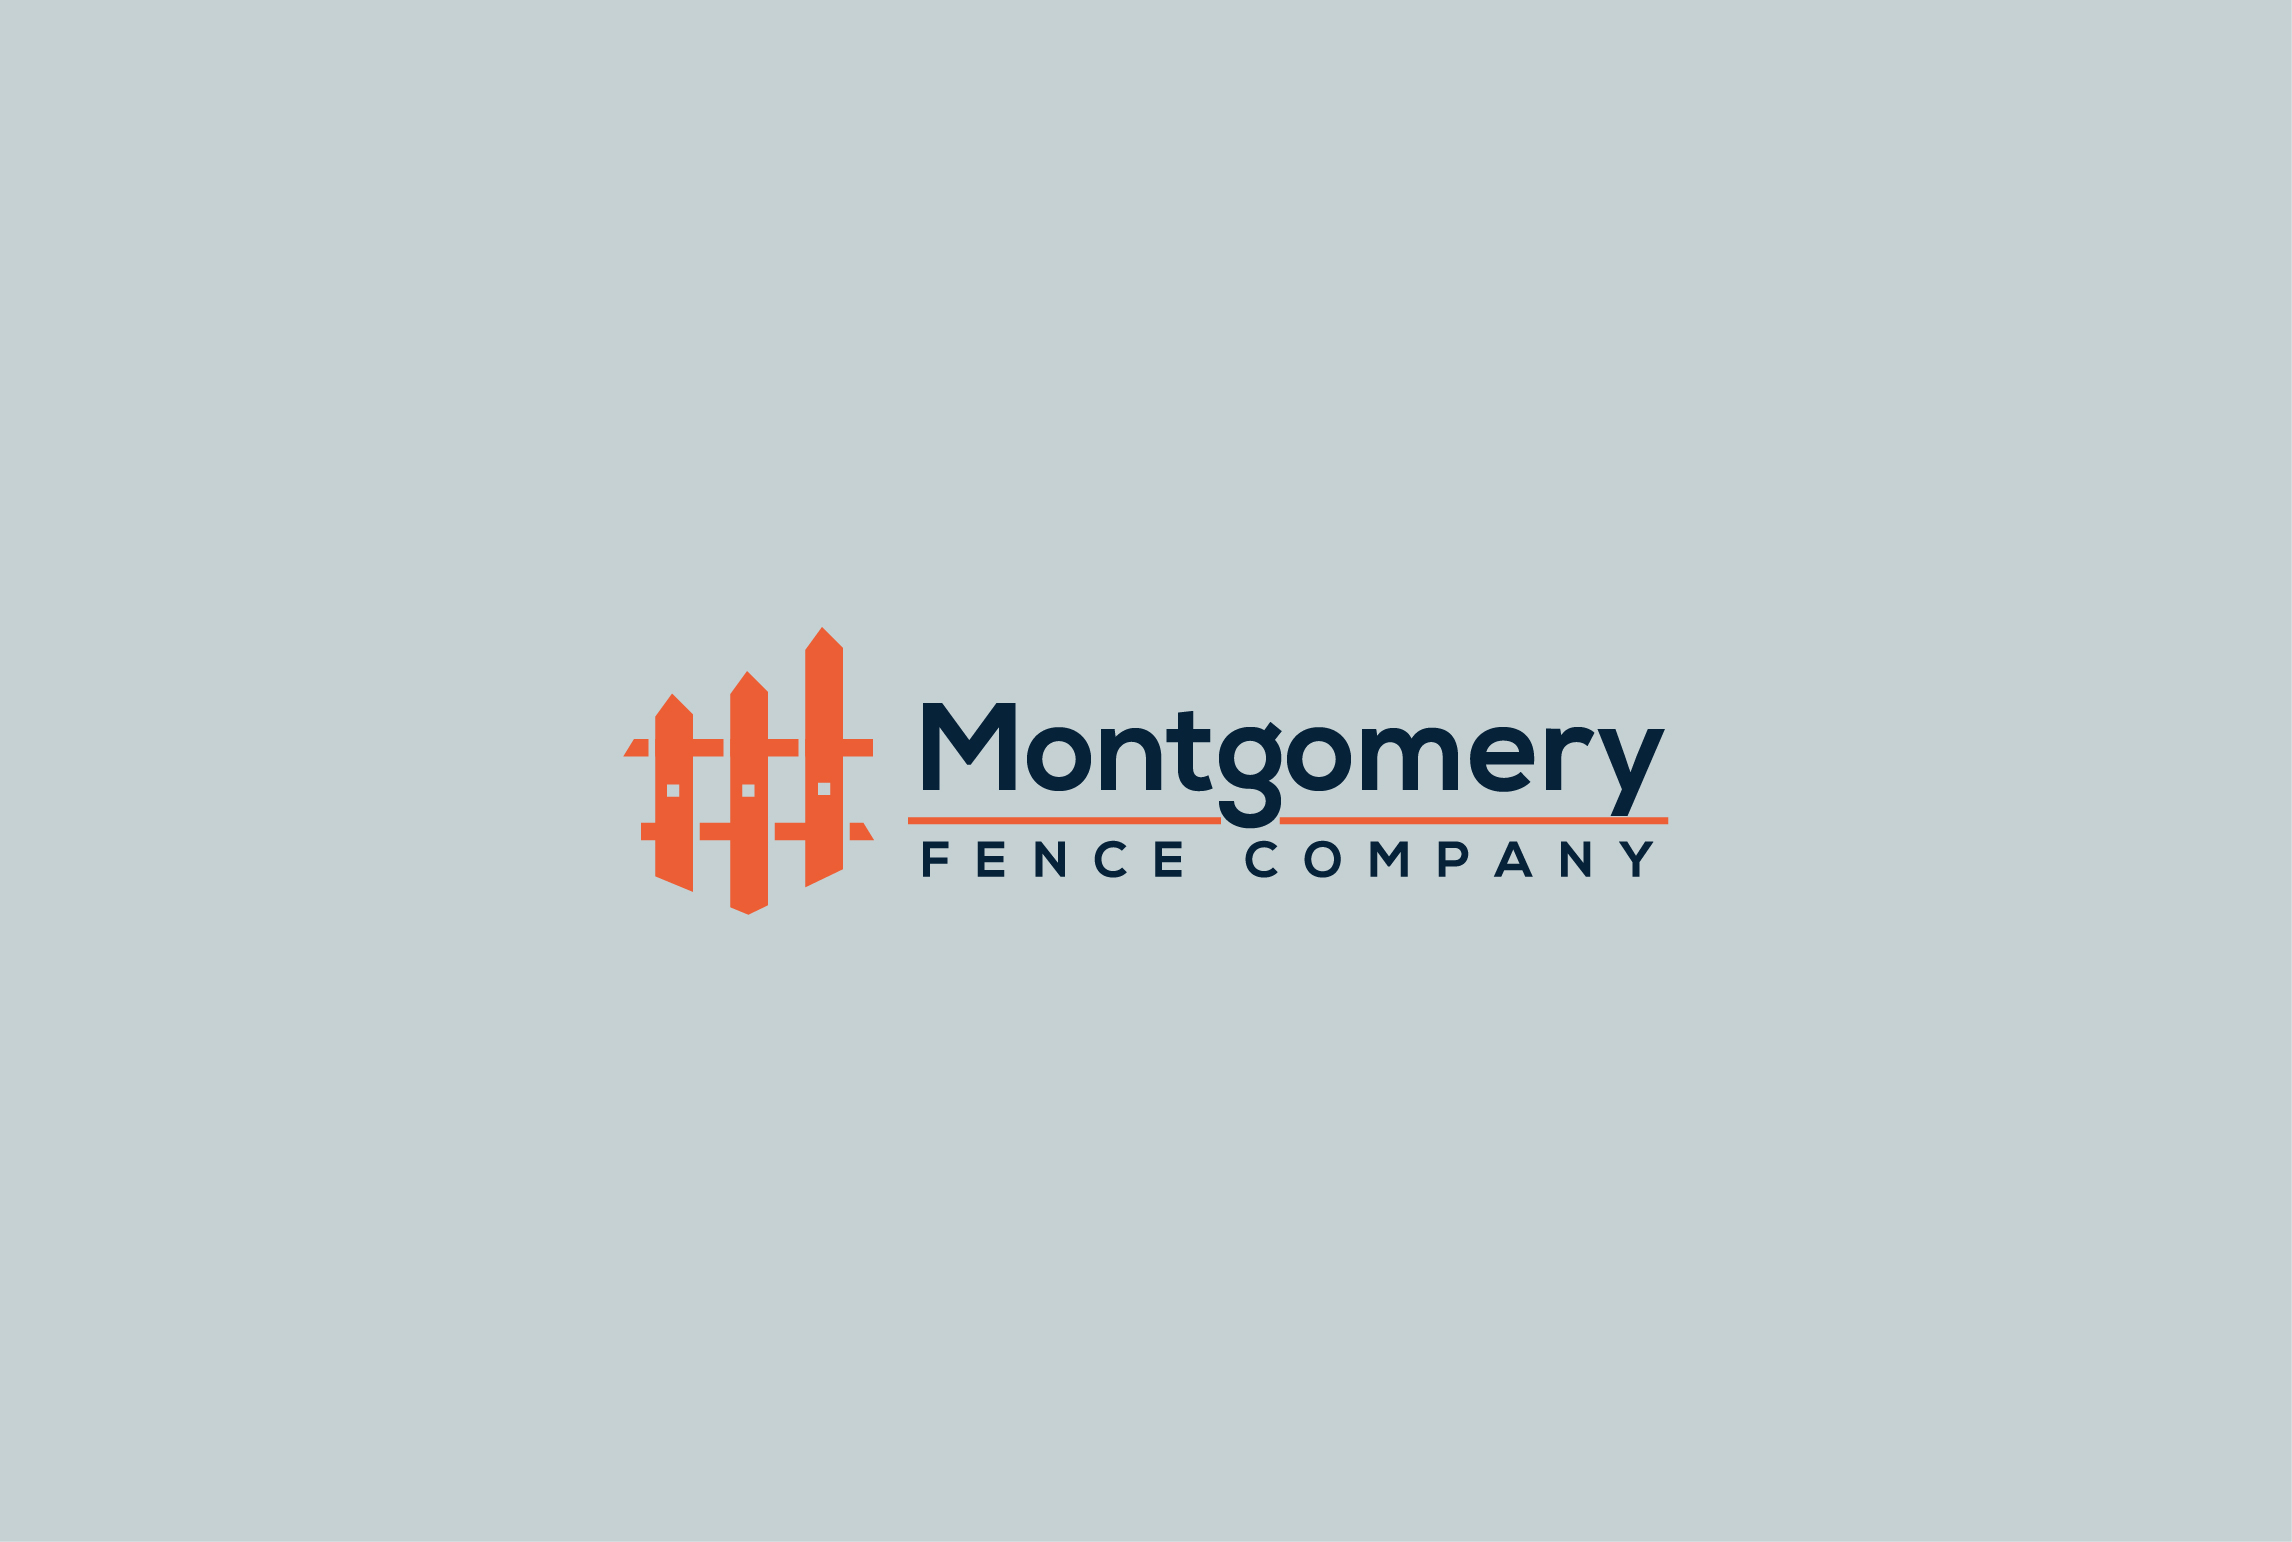 Montgomery Fence Company